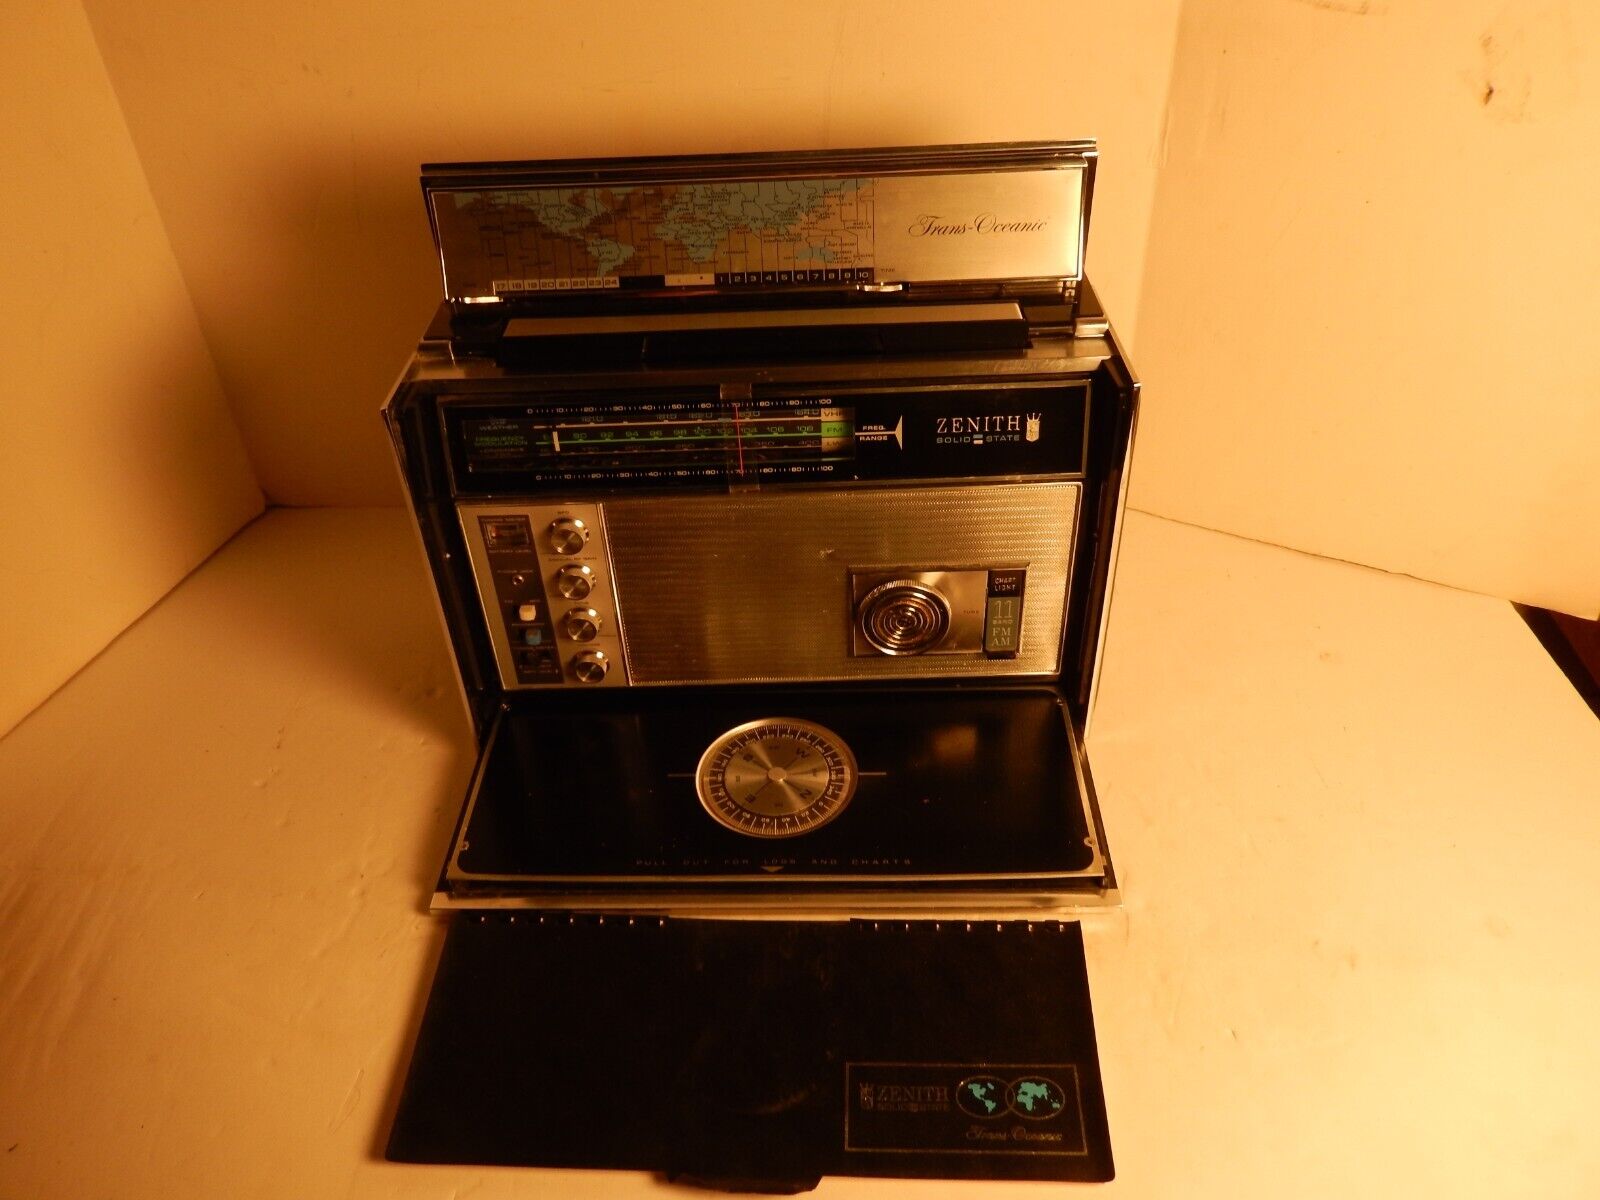 Vintage Zenith Royal Trans-Oceanic D7000Y 11 Band AM/FM Shortwave Radio Works